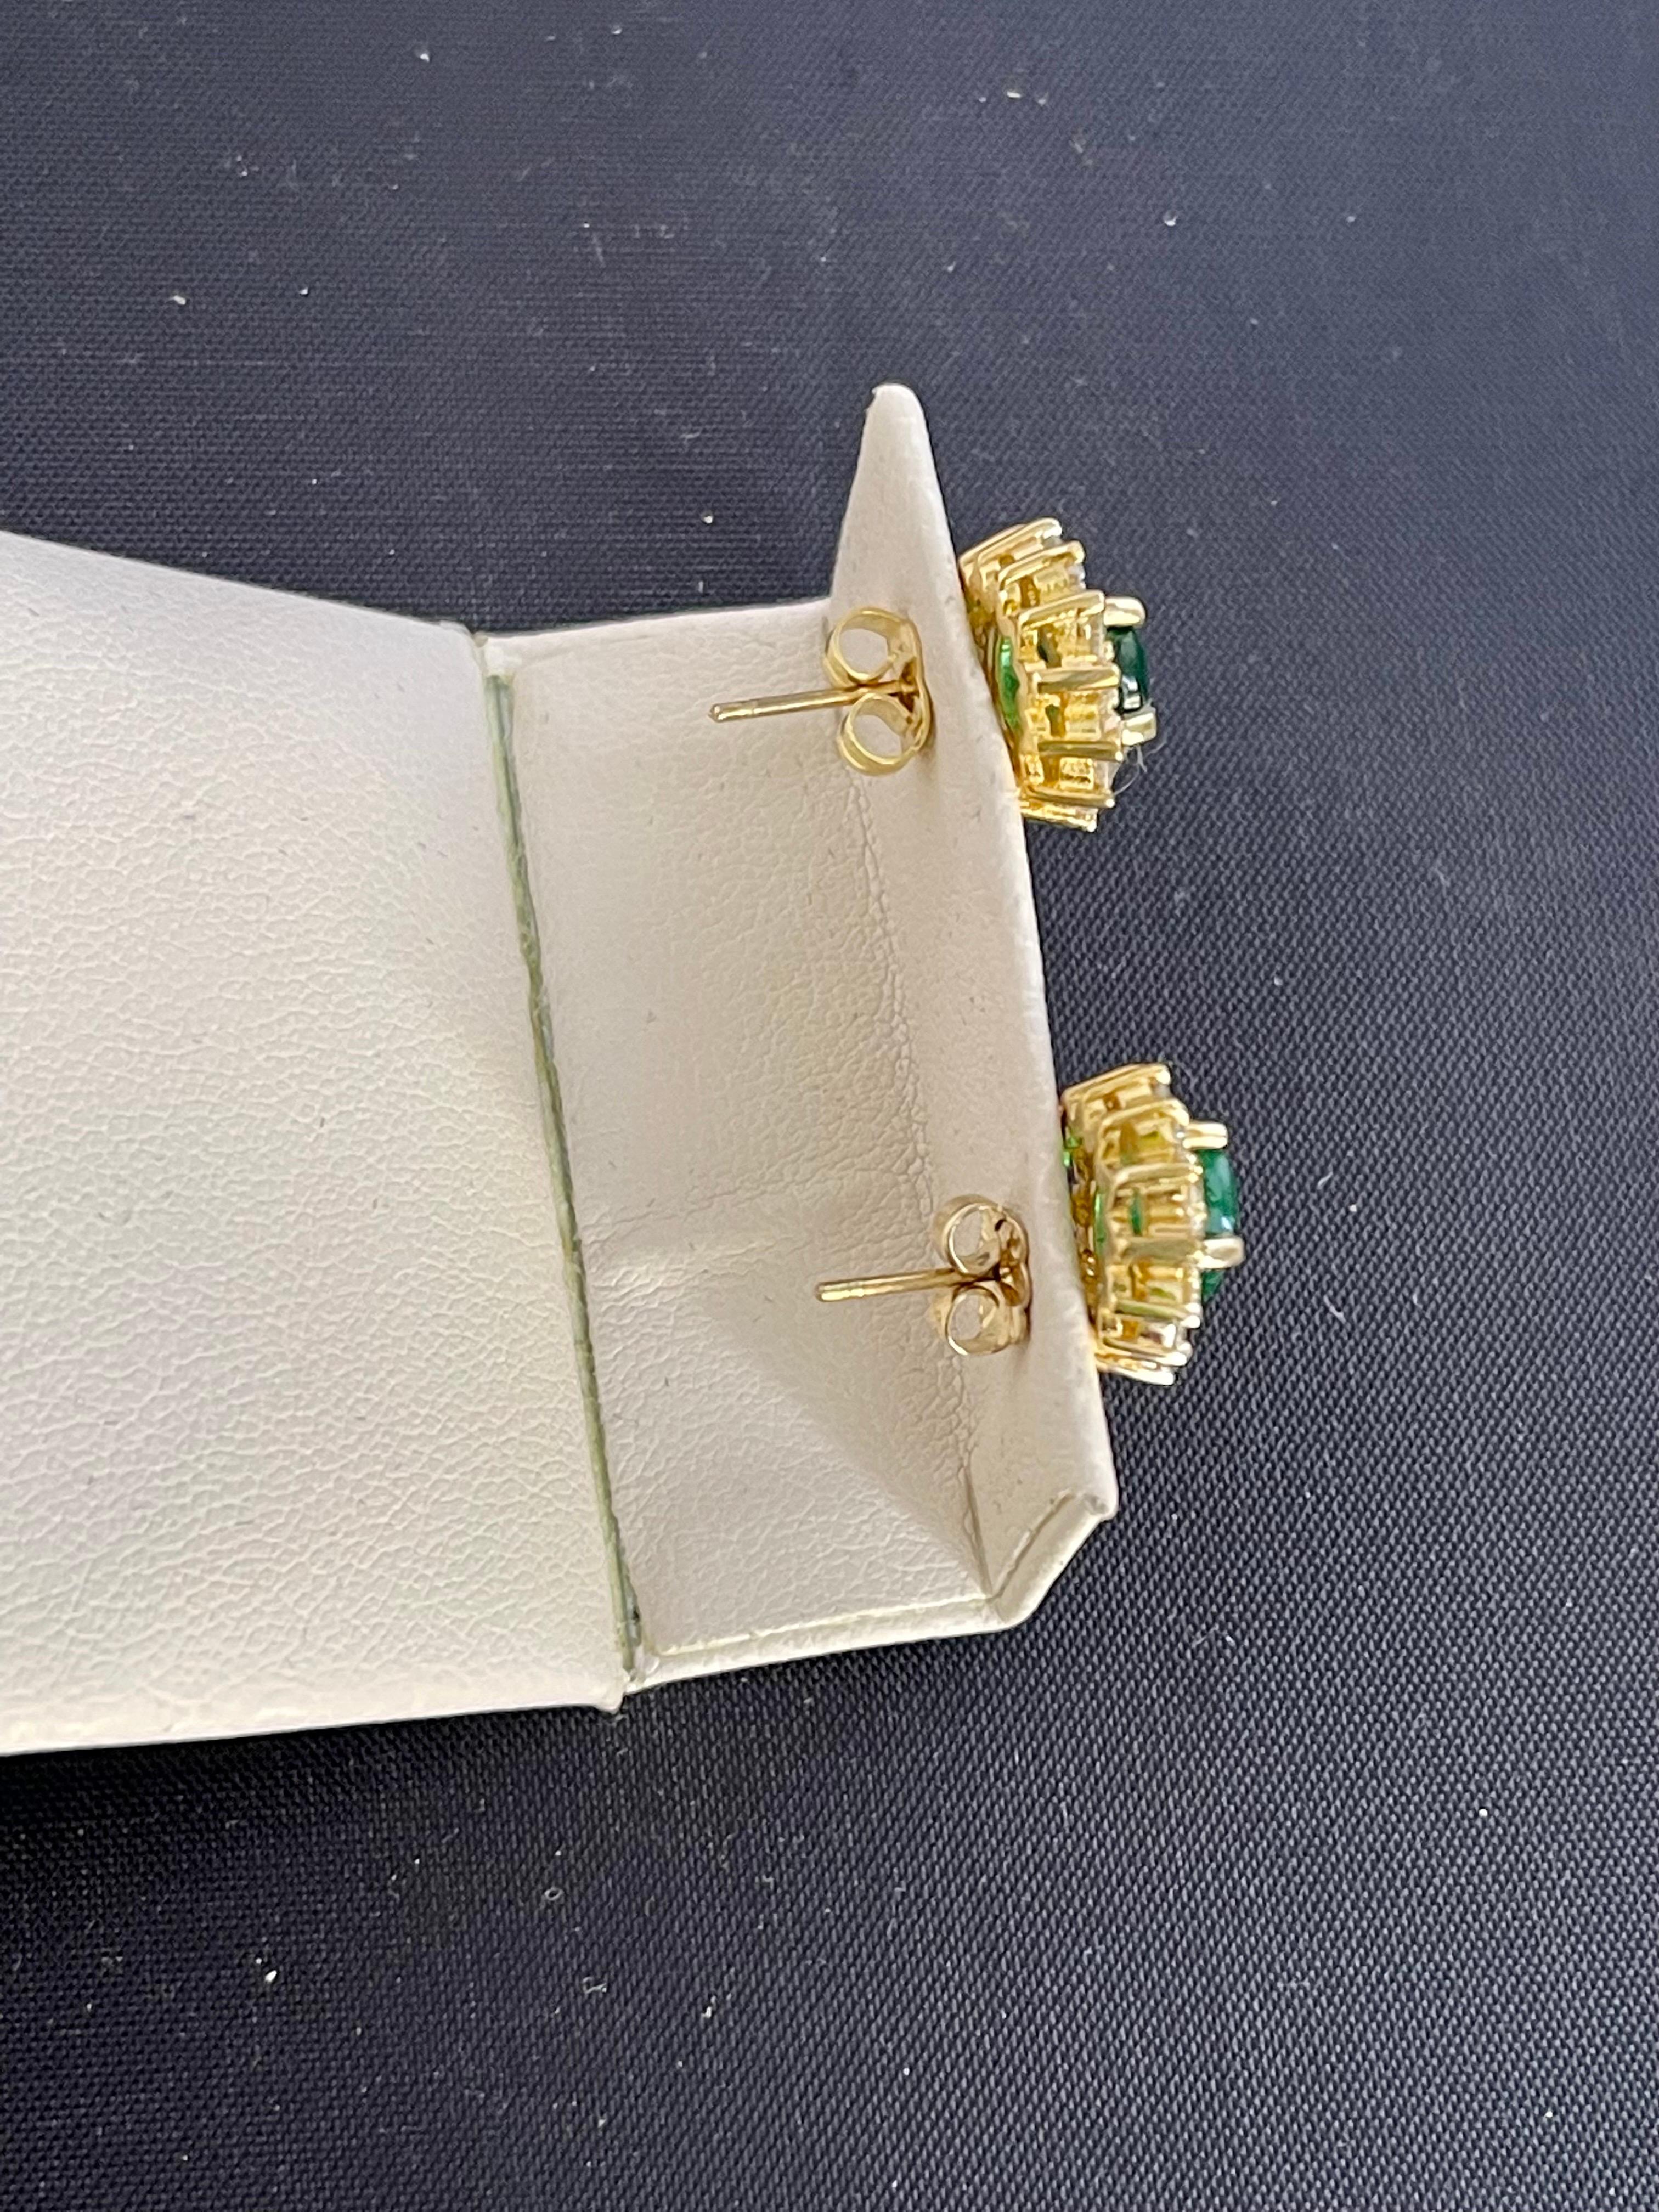 2.8 Carat Oval Shape Emerald and Diamond Post Back Earrings 14 Karat Yellow Gold 10